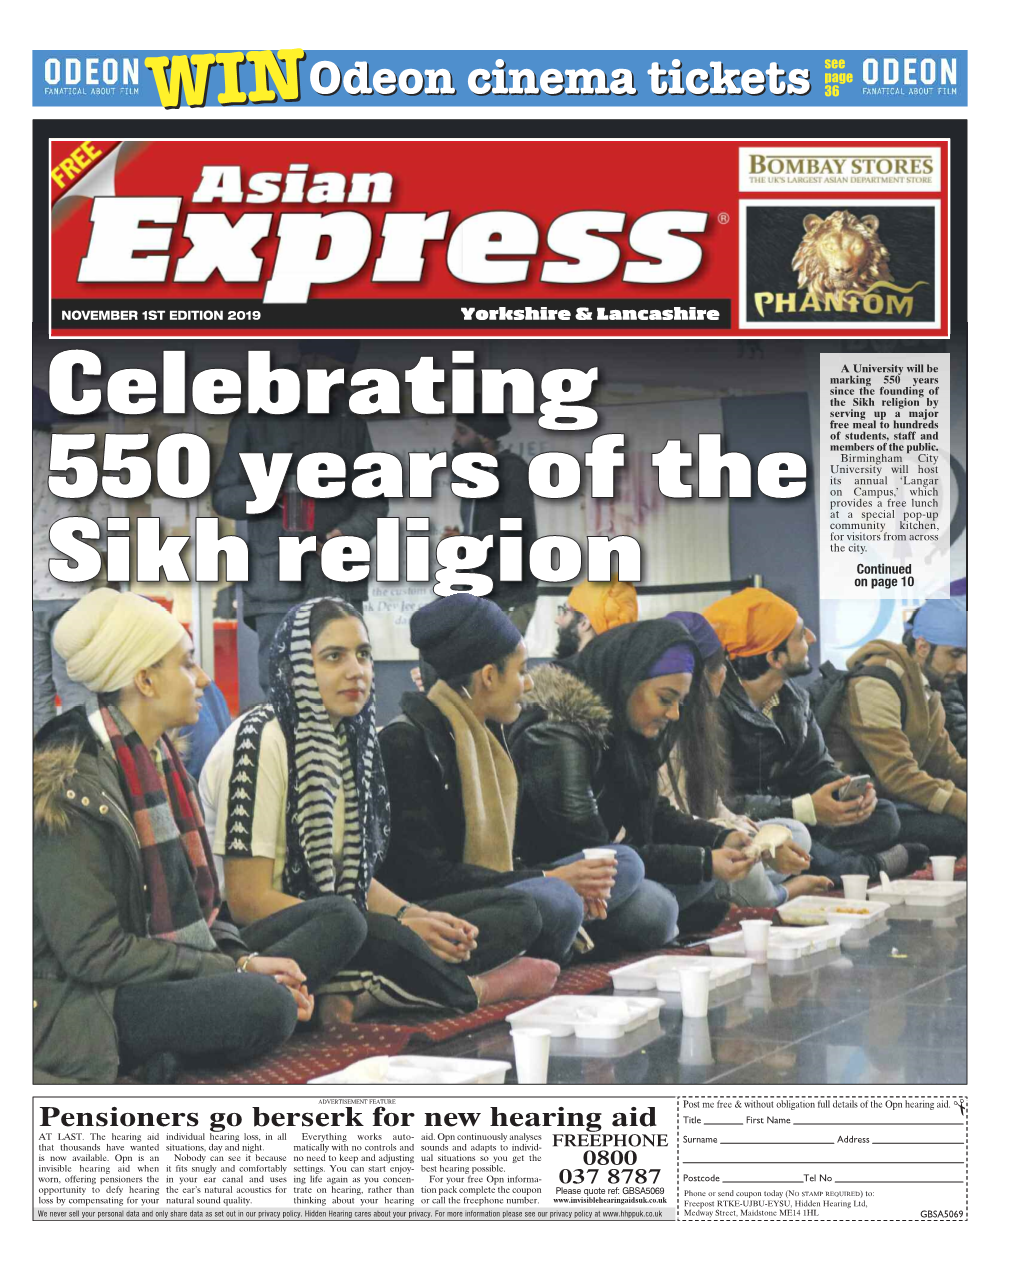 Celebrating 550 Years of the Sikh Religion Students